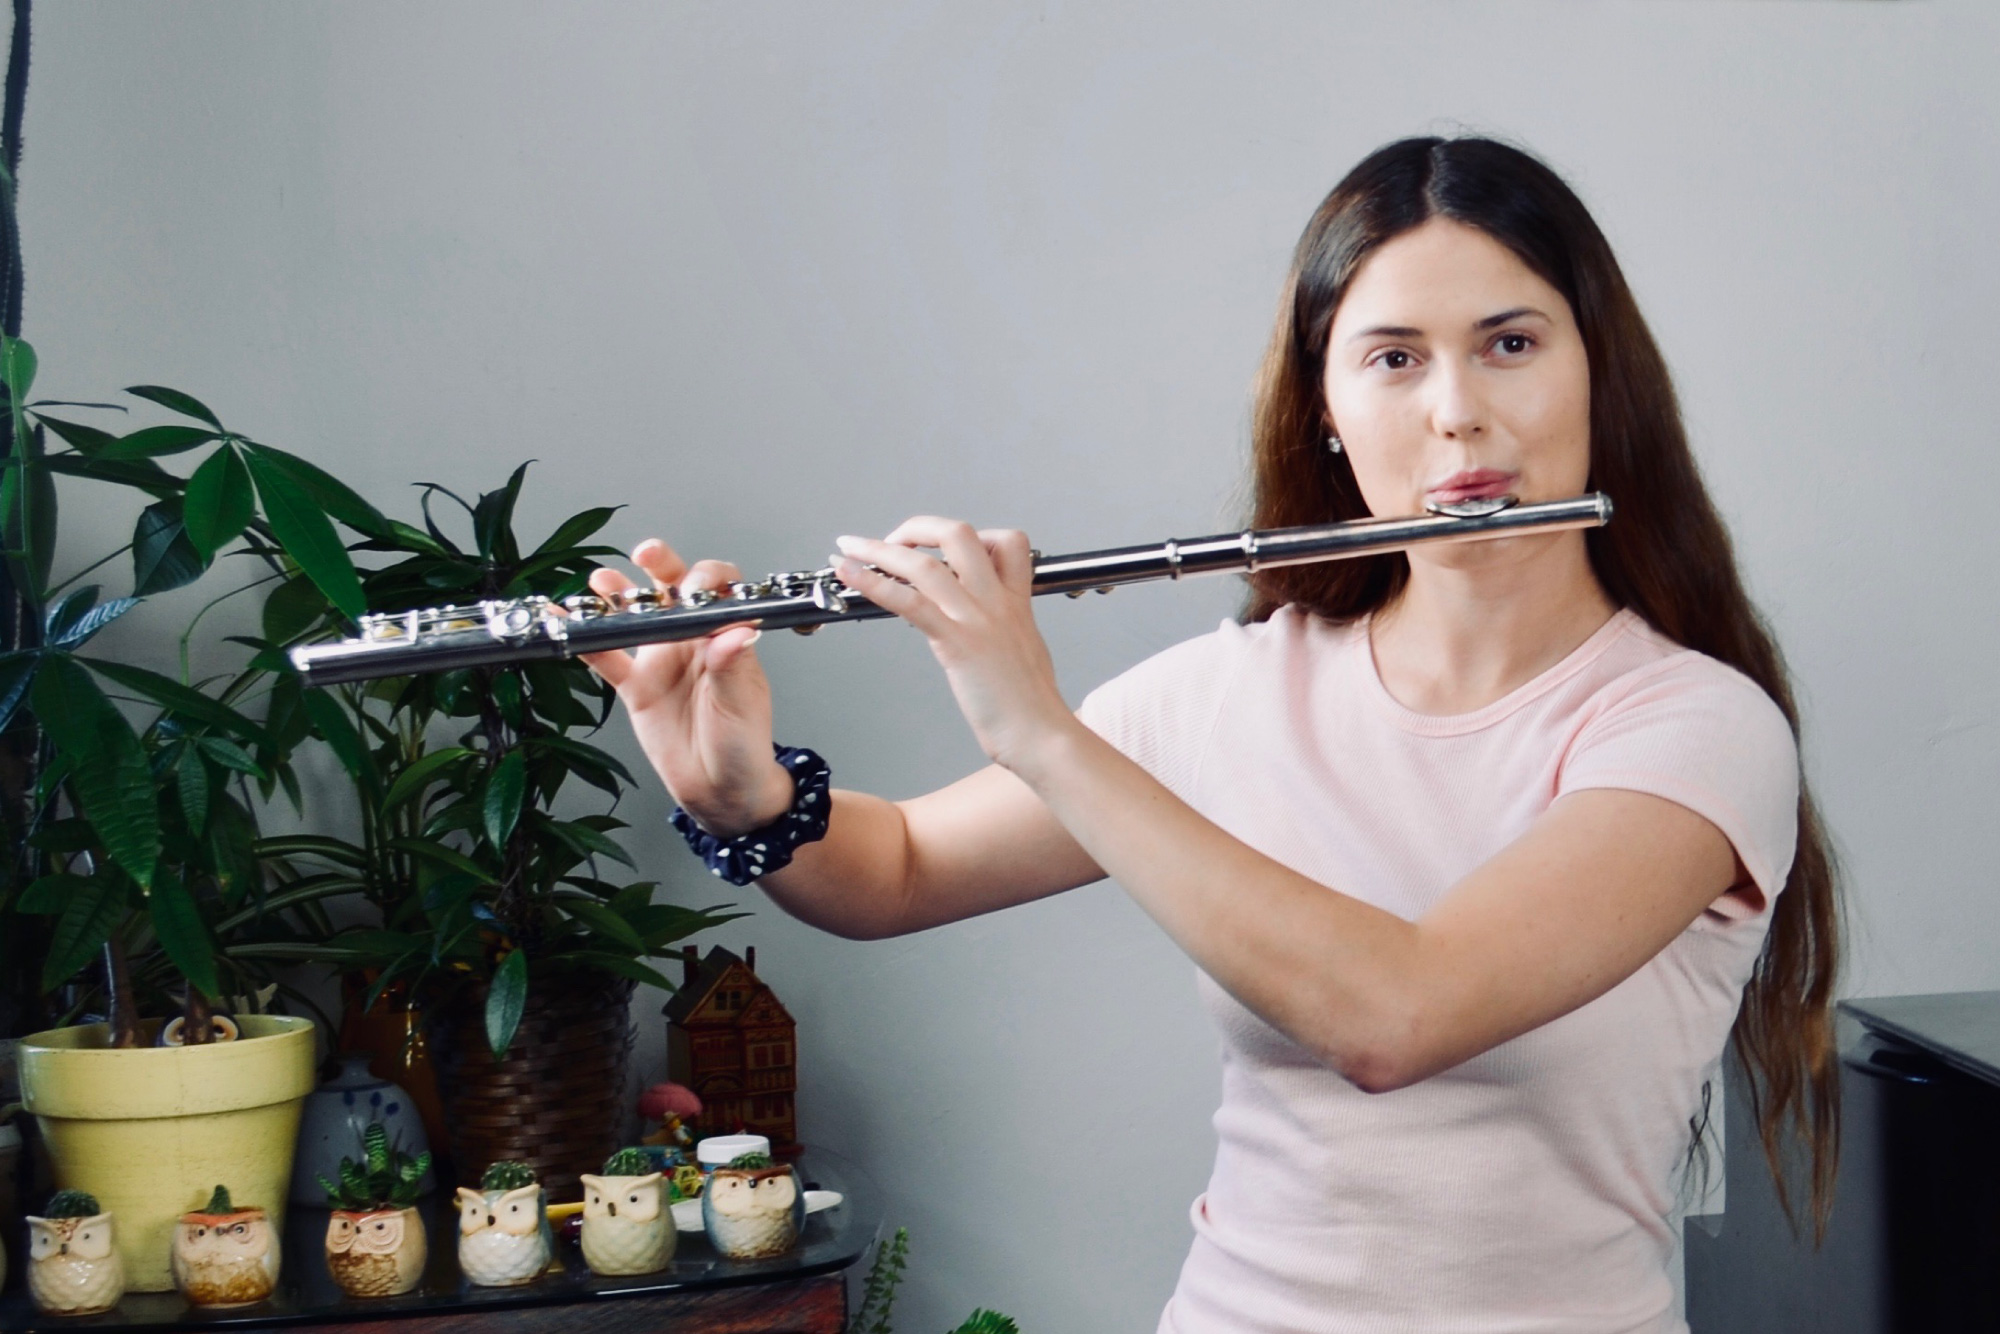 Instrument: Flute